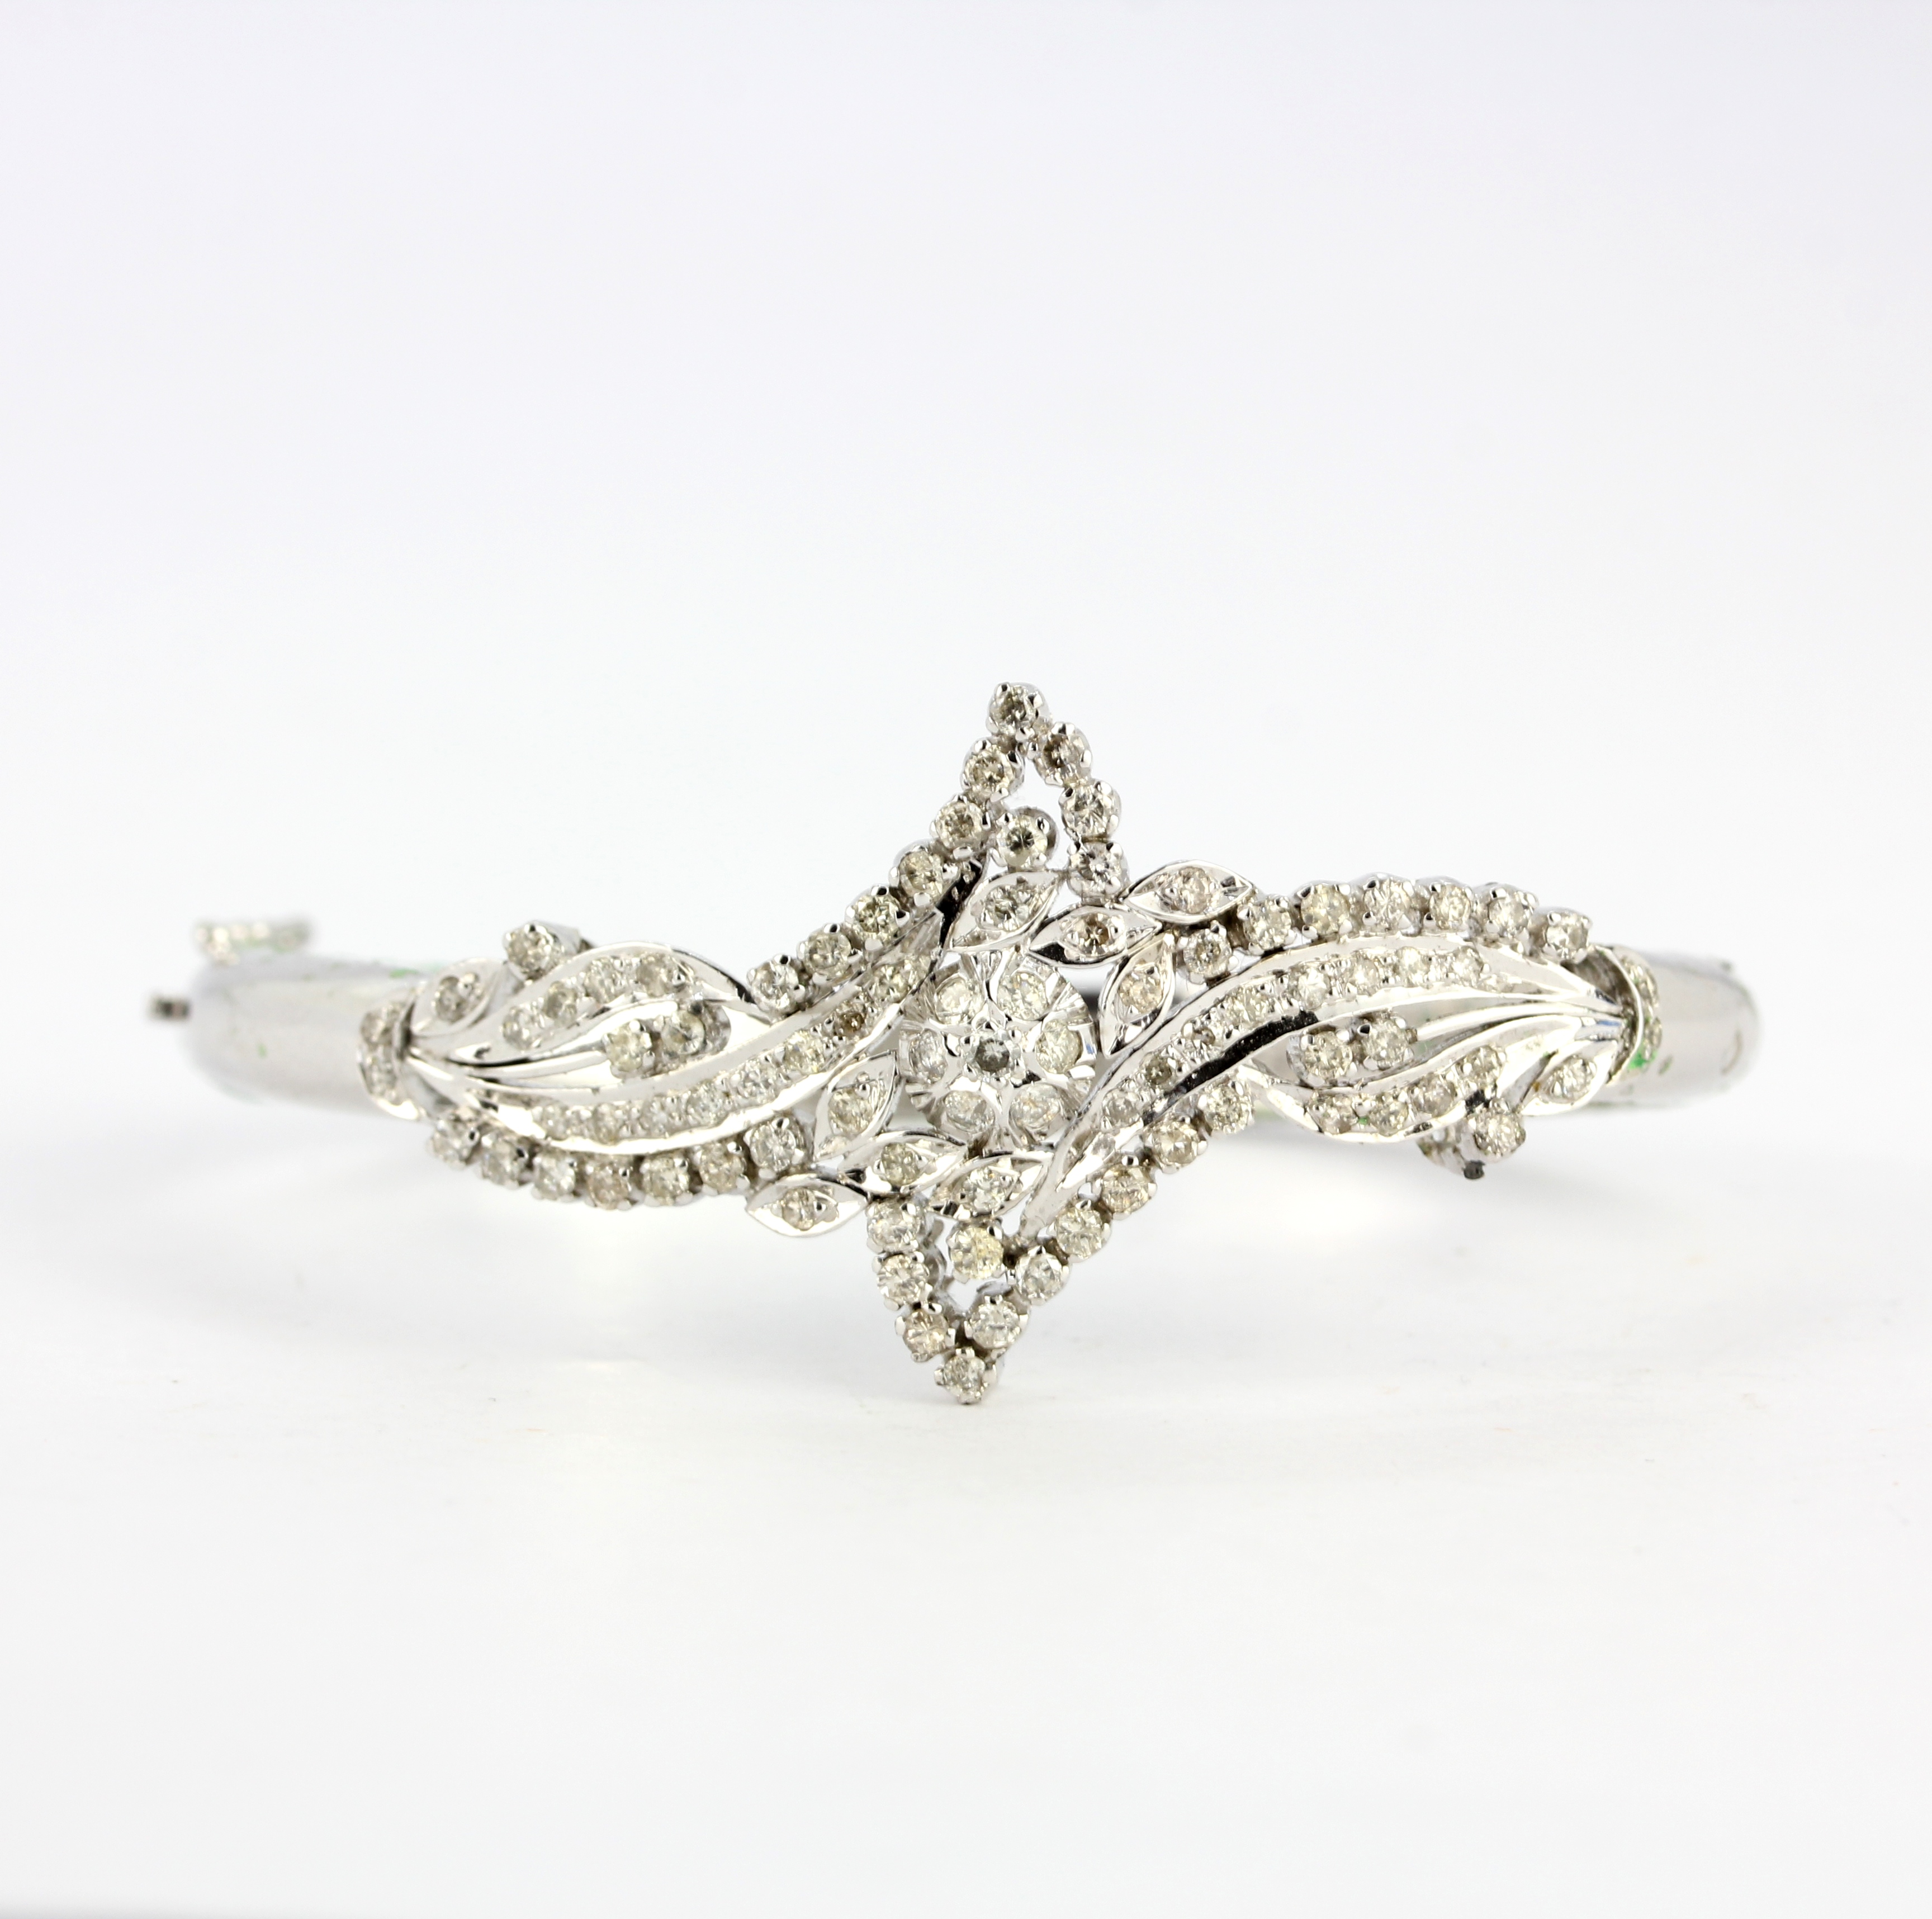 A white gold plated base metal bangle lavishly set with diamonds (ideal for break up), diamond